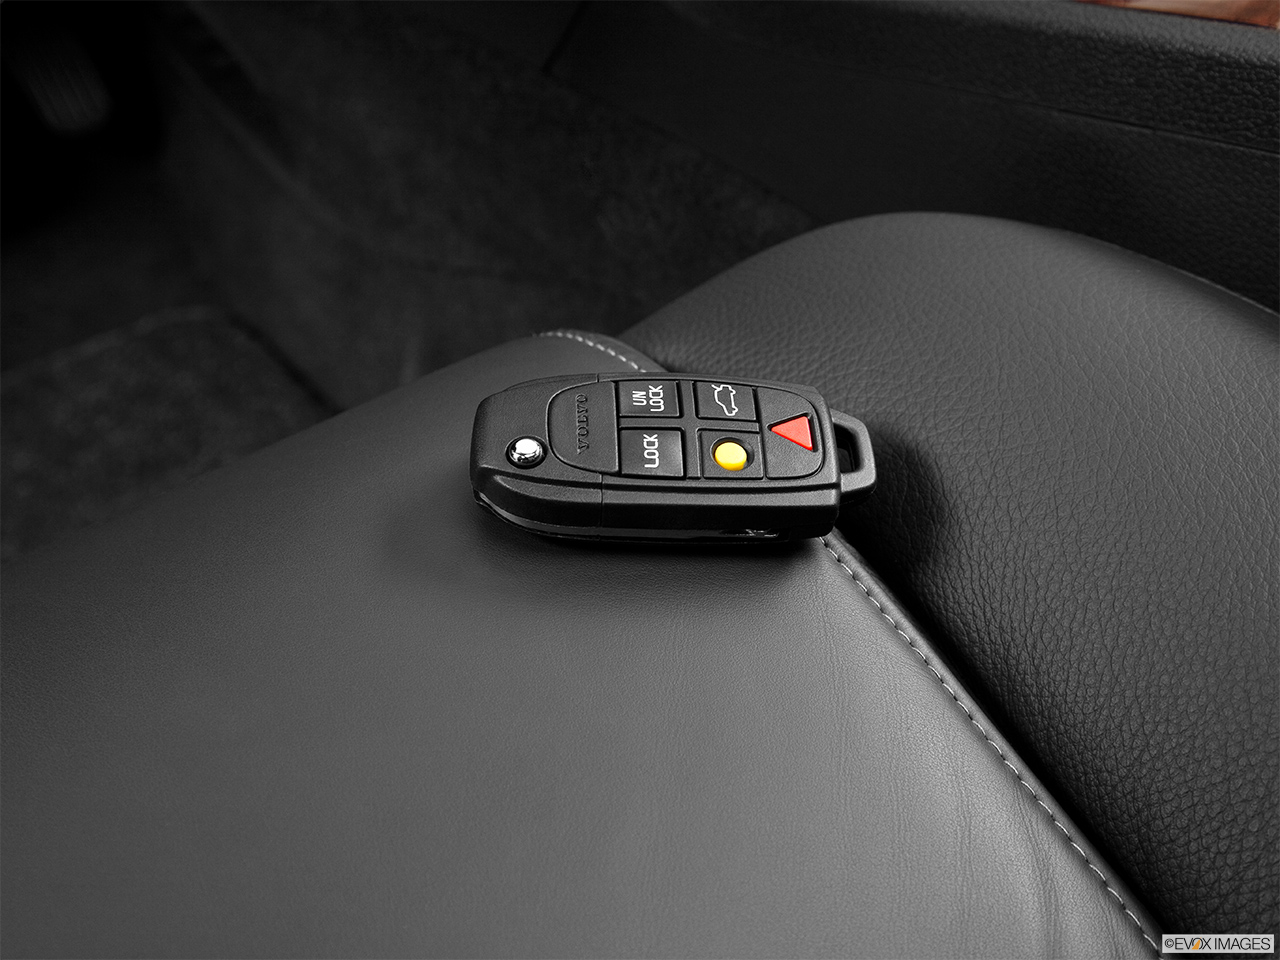 2014 Volvo XC90 3.2 FWD Premier Plus Key fob on driver's seat. 